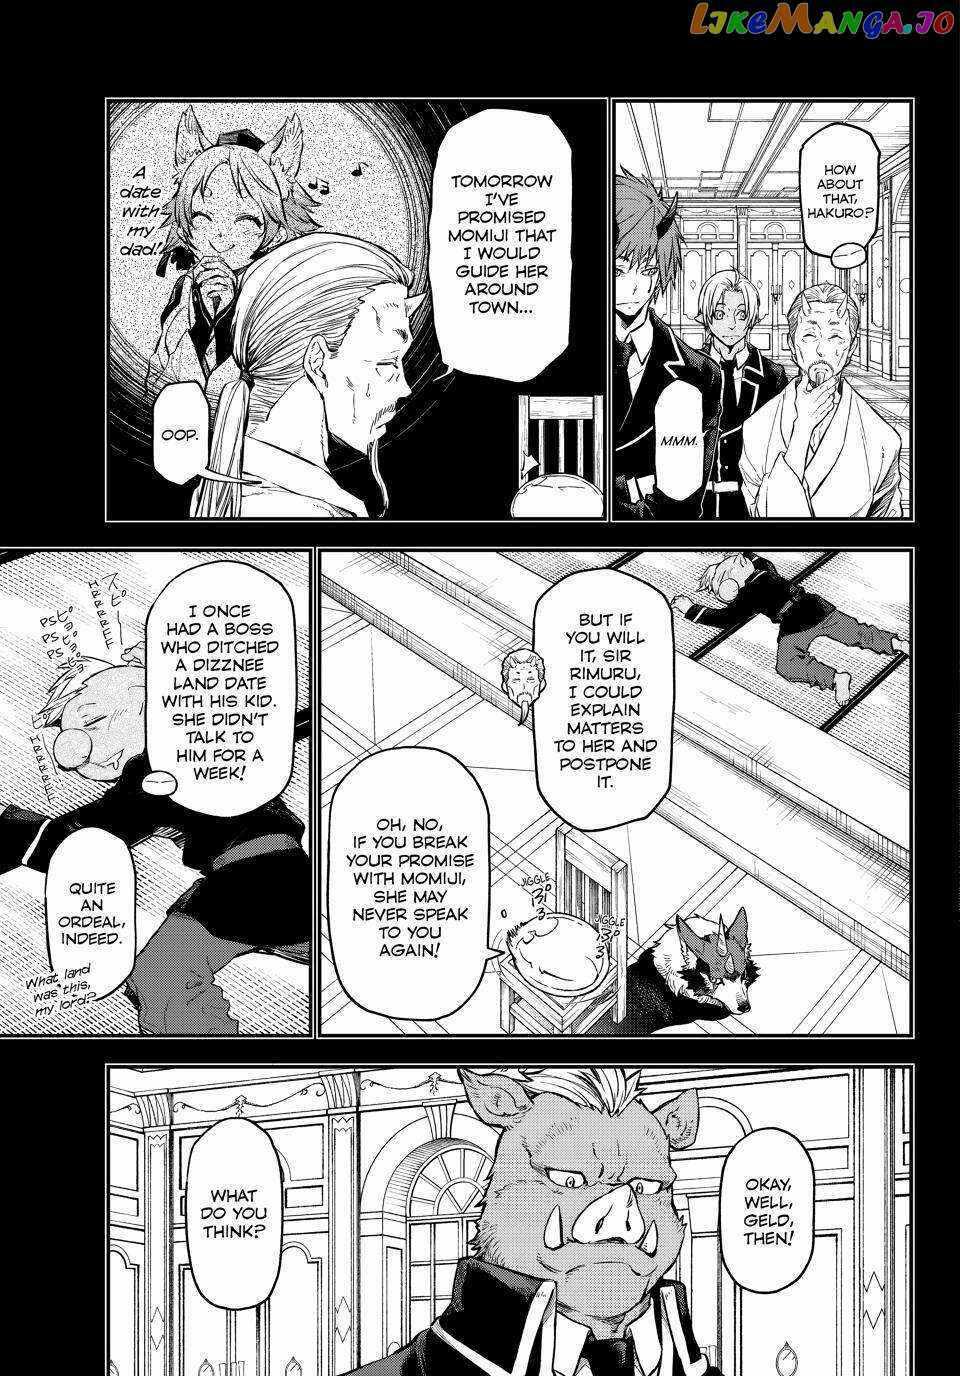 Read Tensei Shitara Slime Datta Ken Manga English [New Chapter 113] Online  Free : r/thattimeigotslime